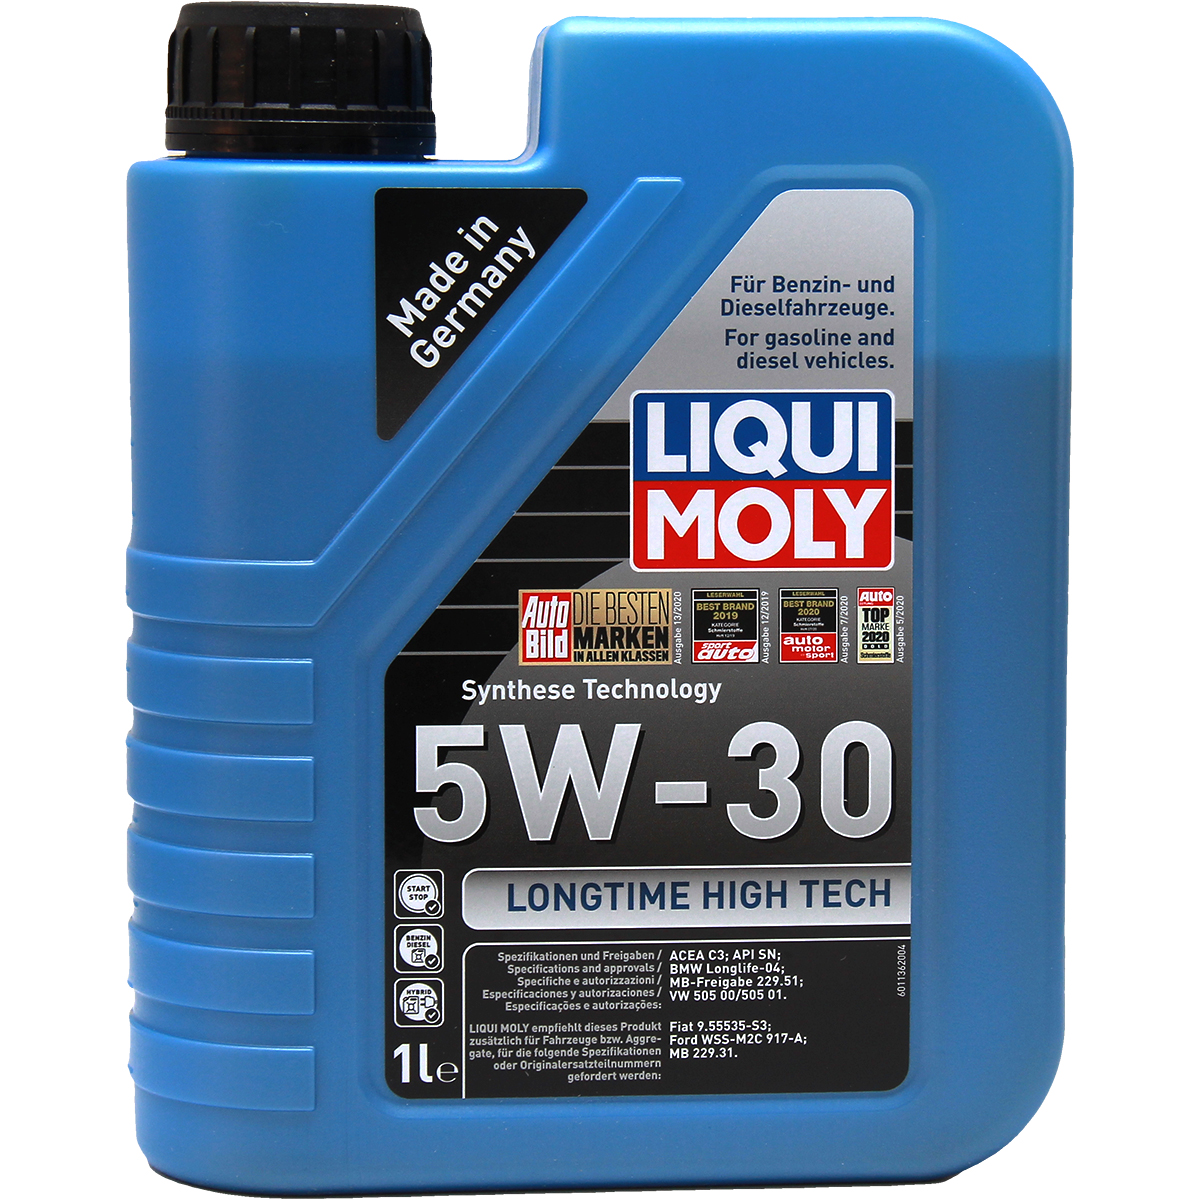 Liqui Moly Longtime High Tech 5W-30 9x1 Liter